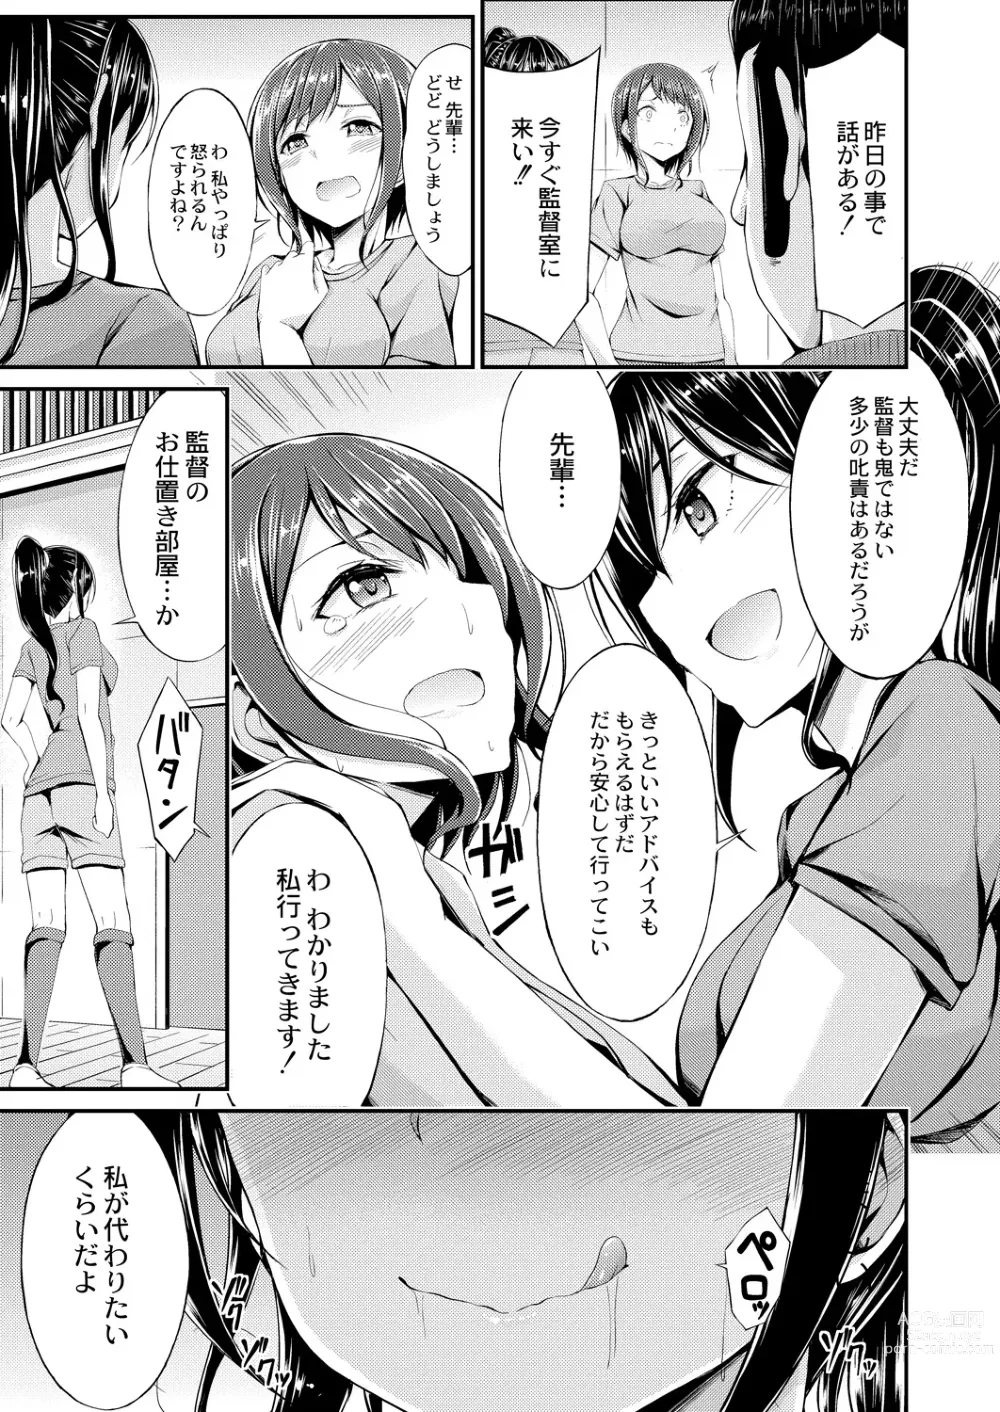 Page 5 of manga Bitch The Fxxk!